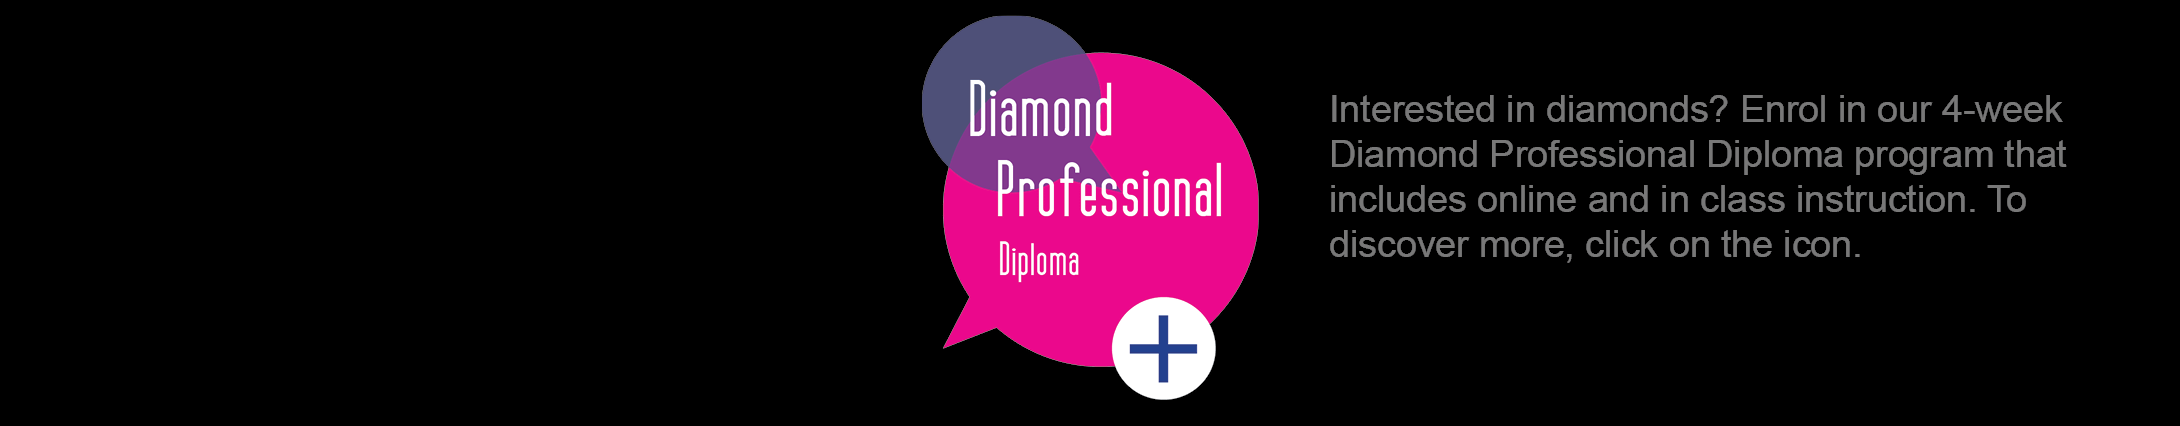 Diamond Professional Learn More